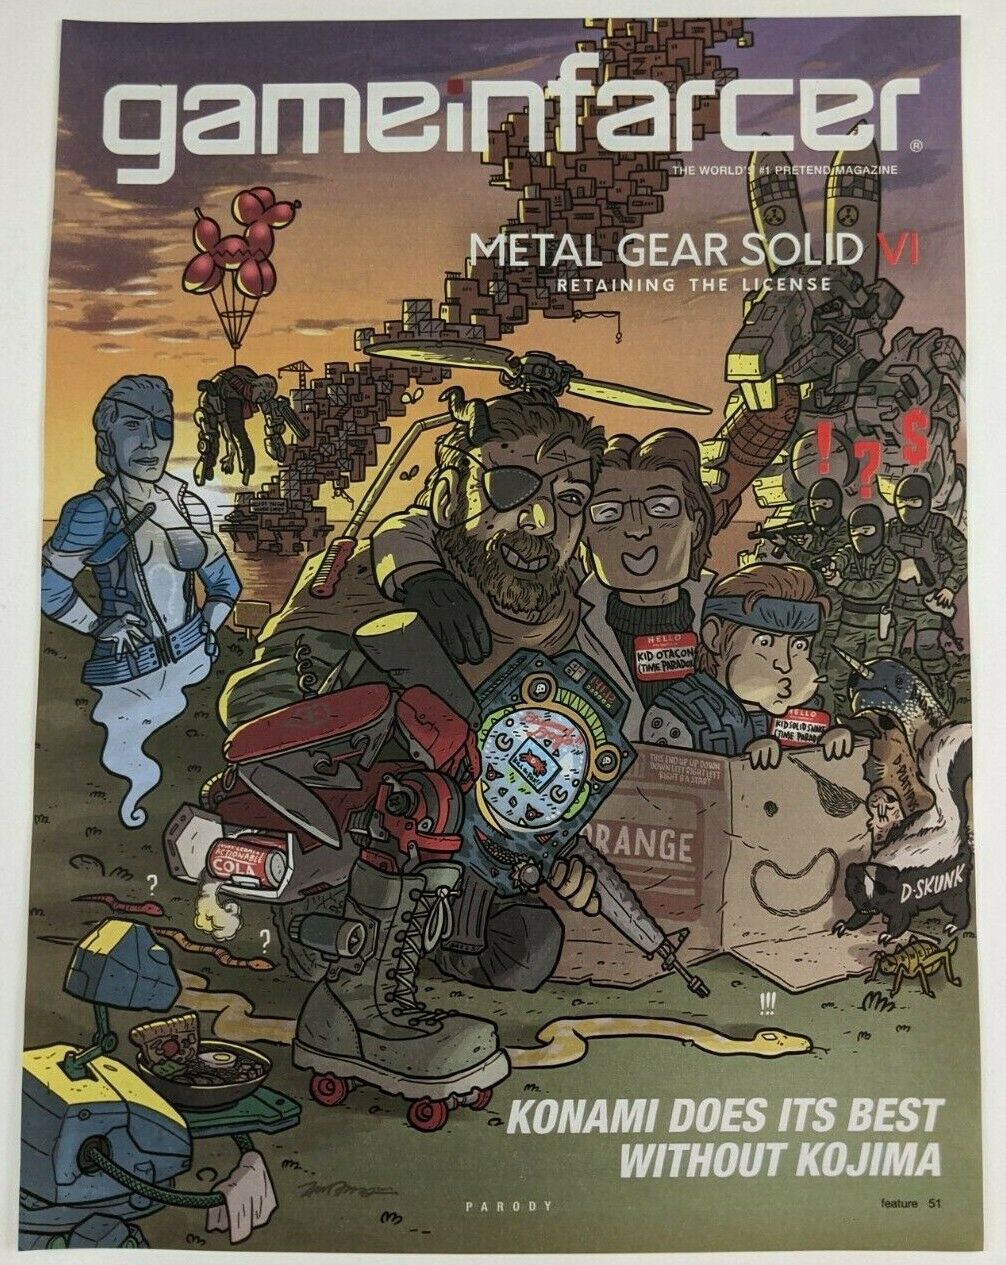 GameInfarcer Metal Gear Solid Parody Print Ad Game Poster Art PROMO Konami MGS